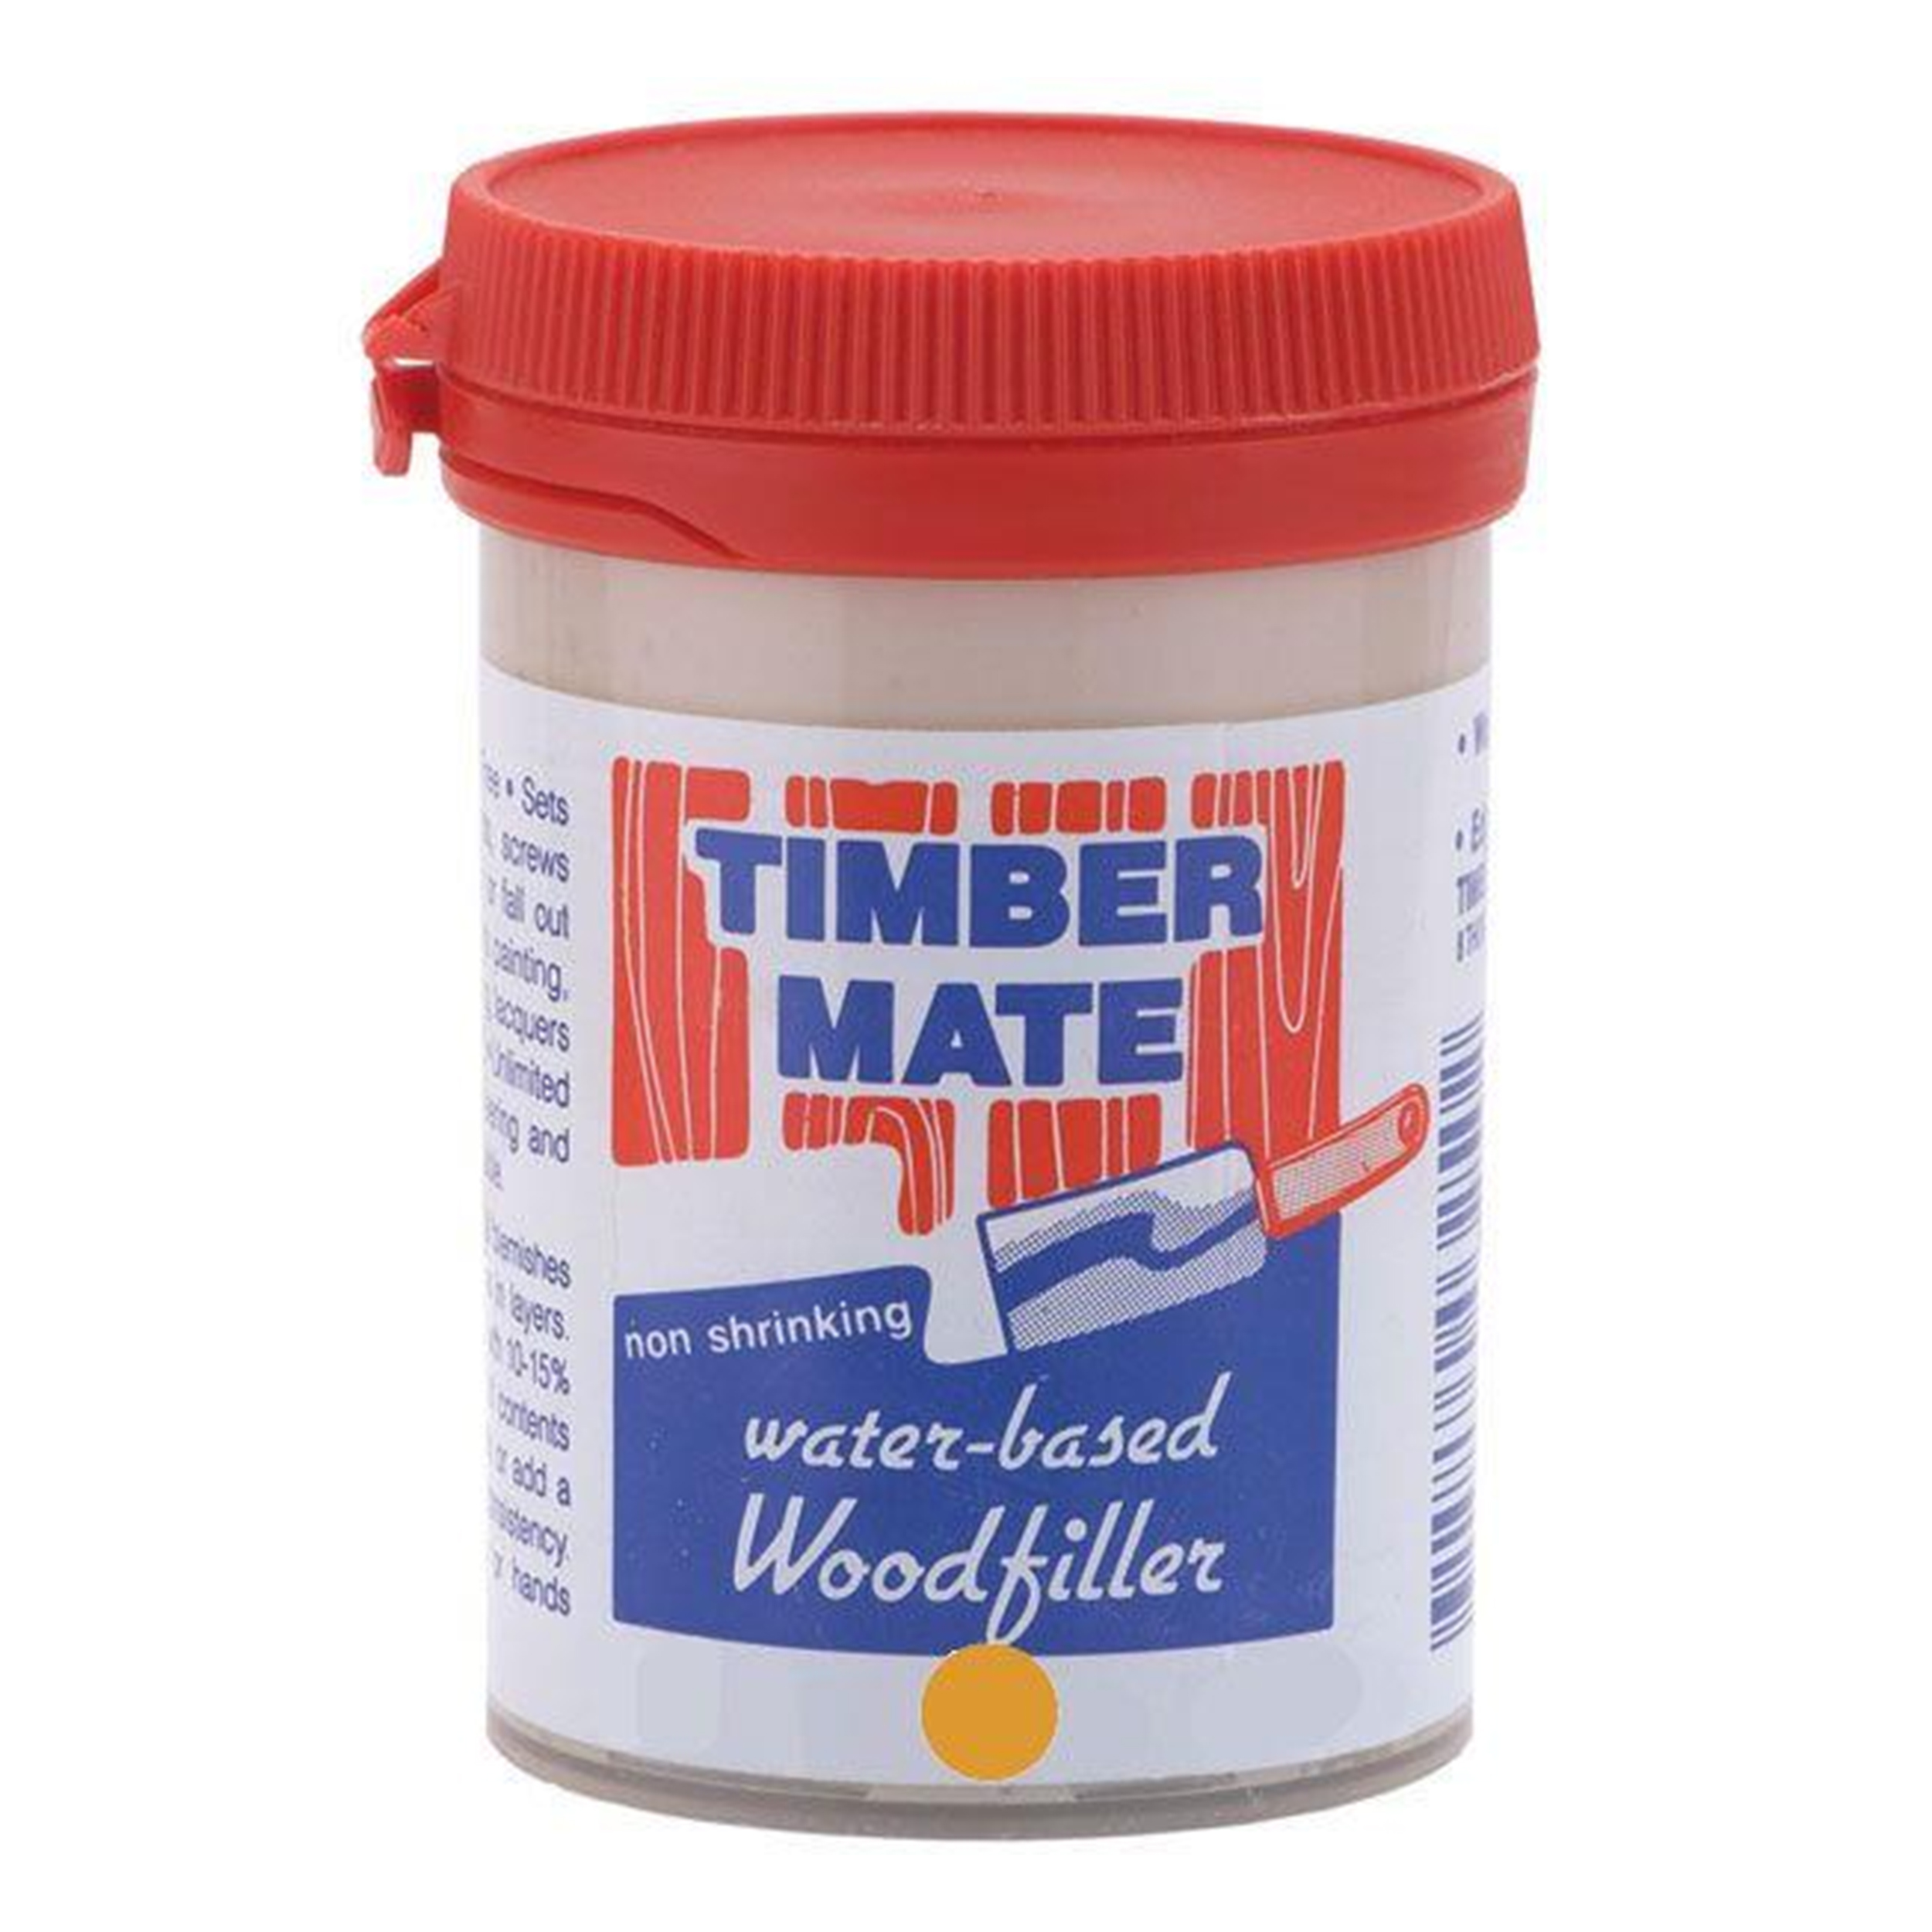 Wood Filler, Water Based, 8-oz Teak And Heart Pine